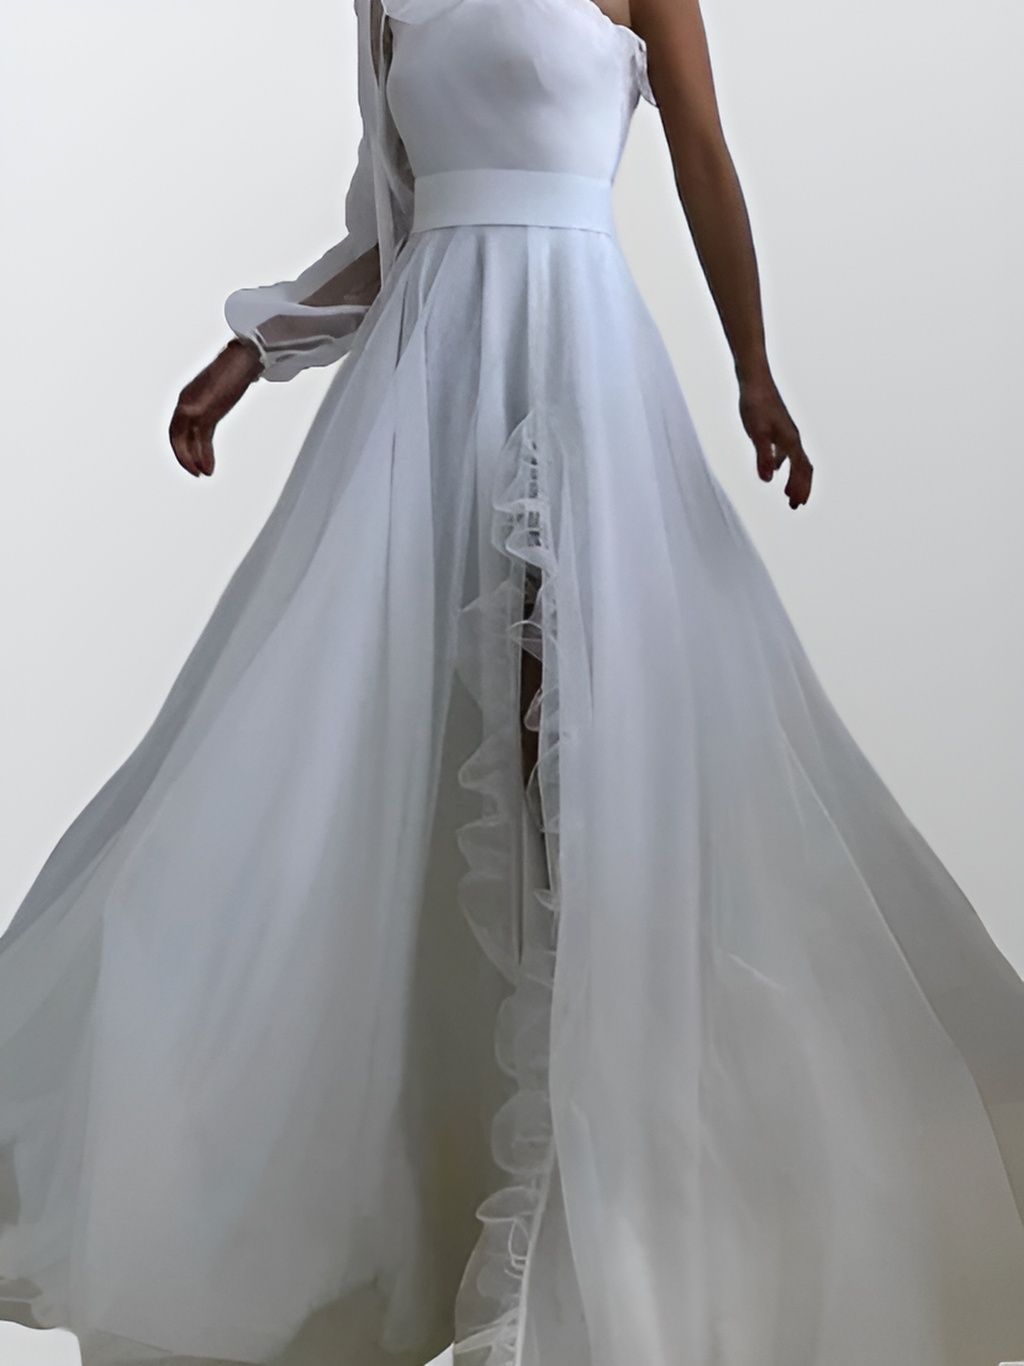 LULA Bridal - DAYNA PLUS Formal Couture Dress Custom made – Lula Bridal